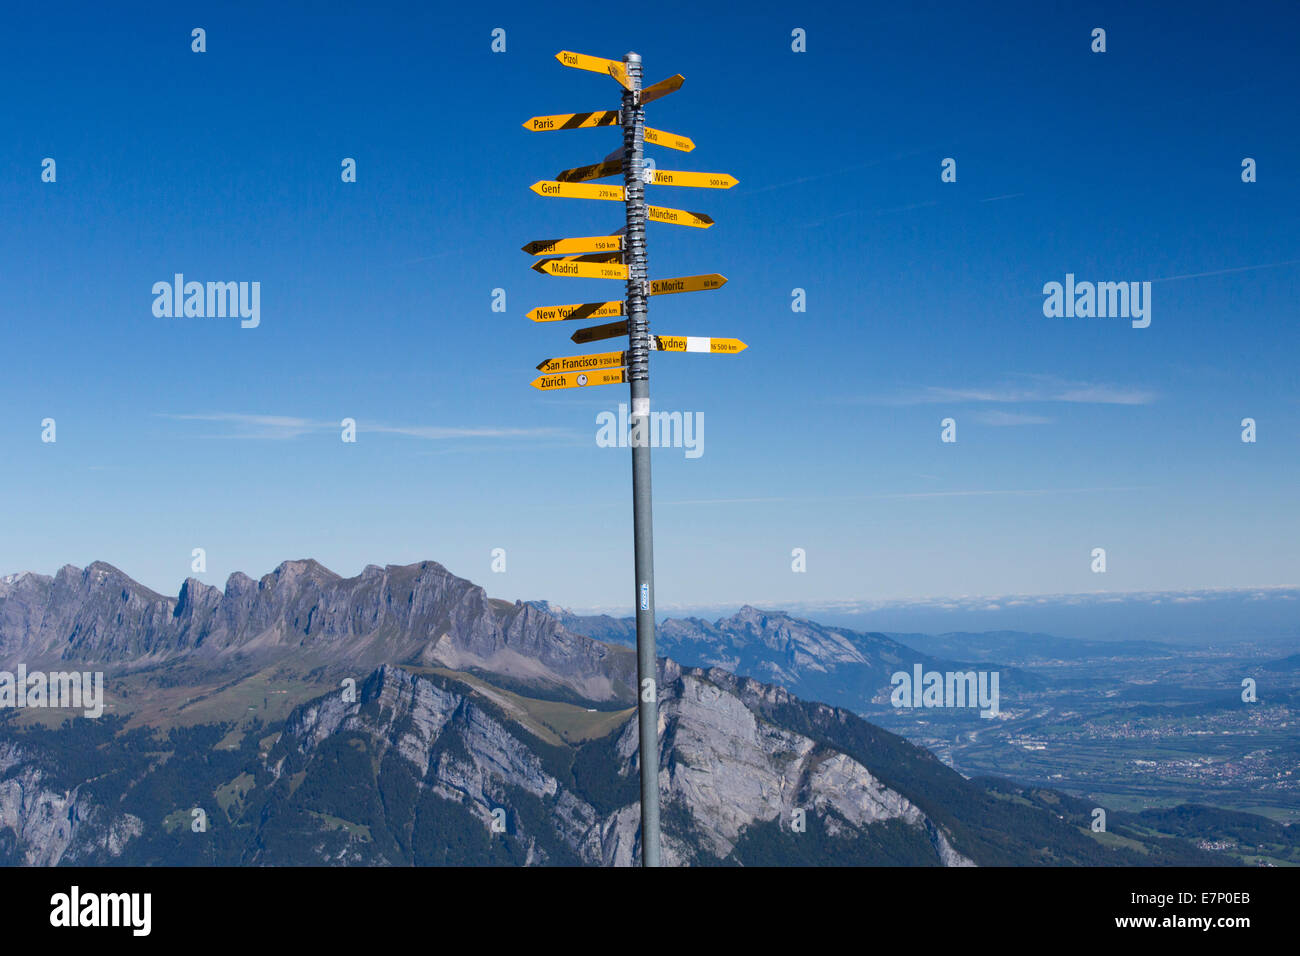 Rhine Valley, signpost, Pizol area, mountain, mountains, SG, canton St. Gallen, footpath, signpost, Switzerland, Europe, Stock Photo